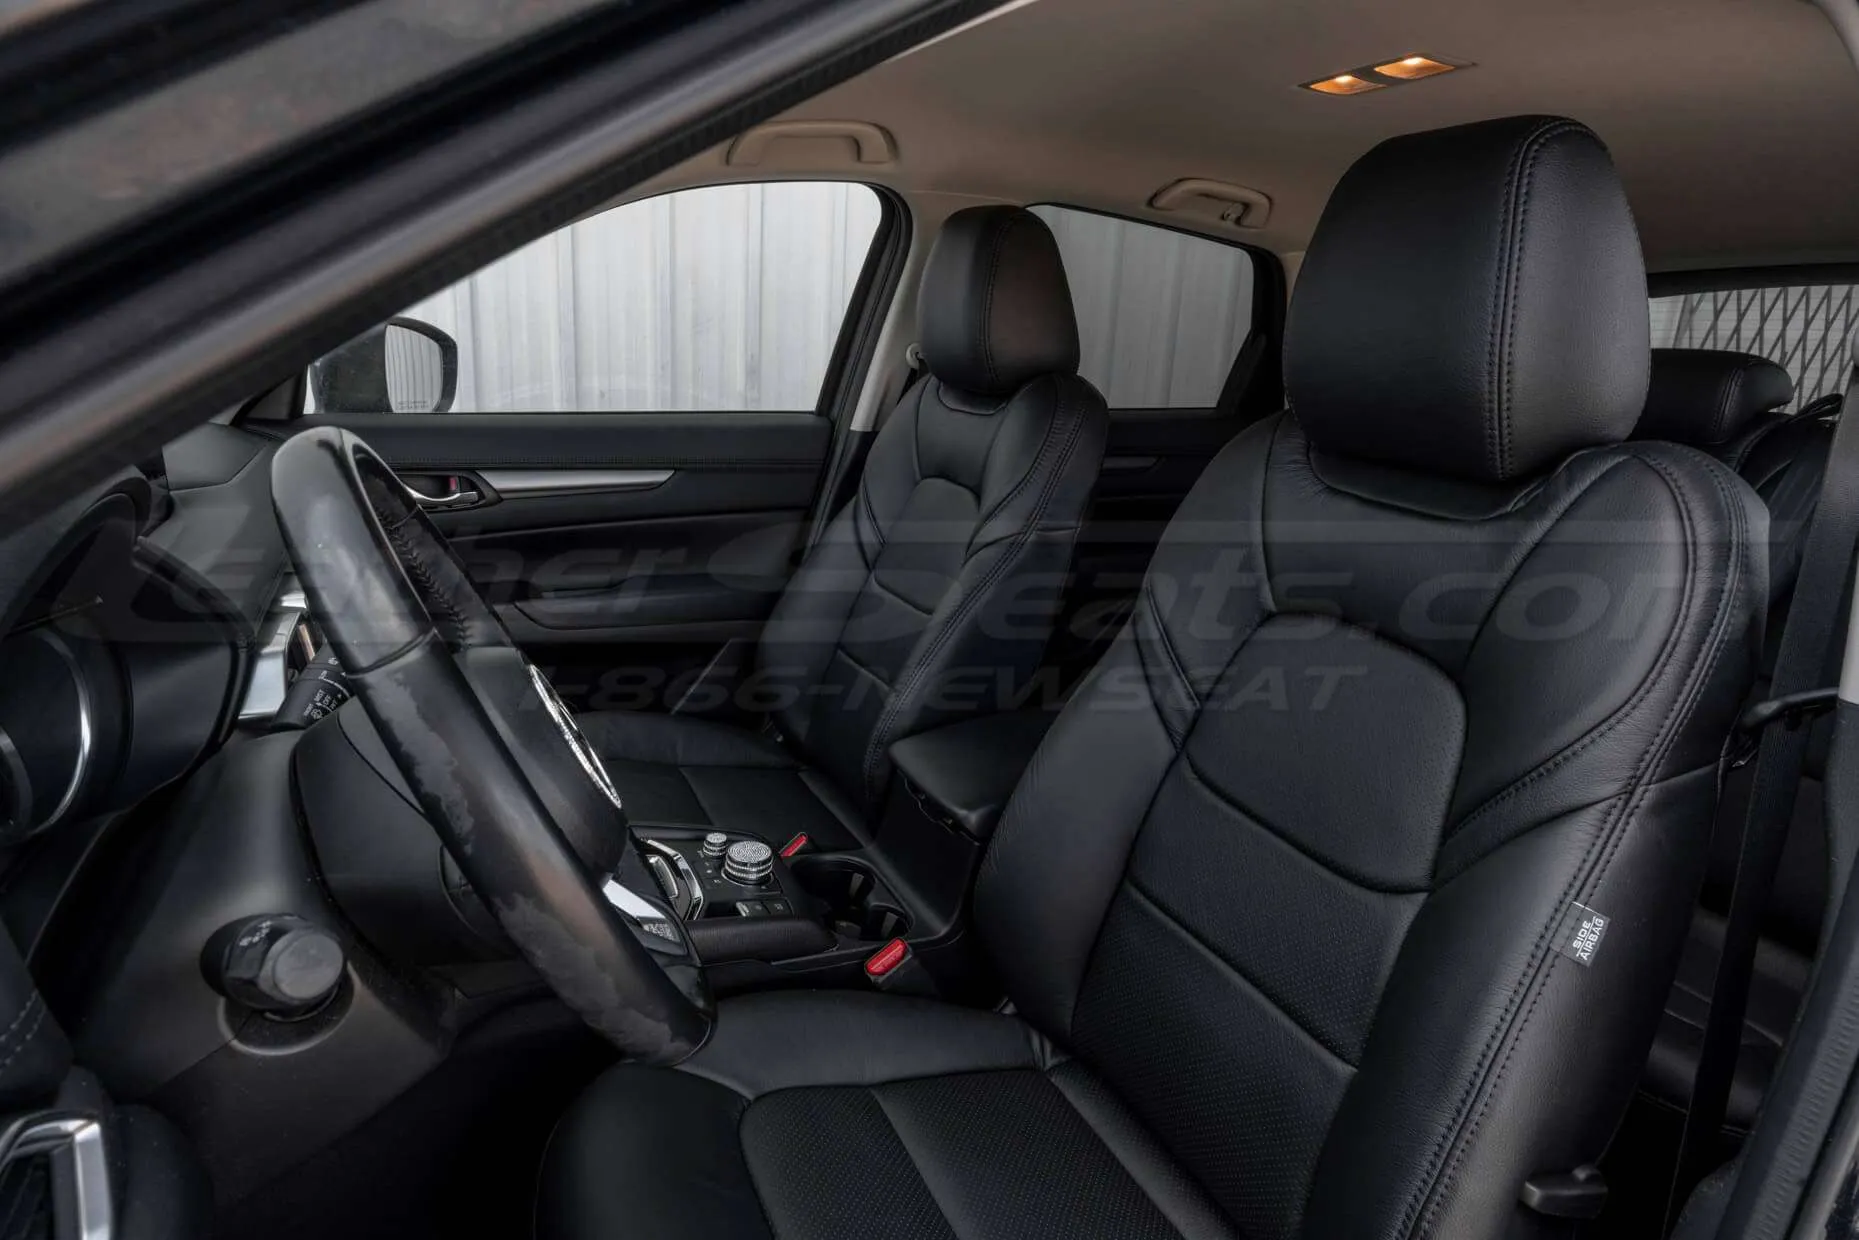 Front backrest up - Mazda CX5 black leather seats